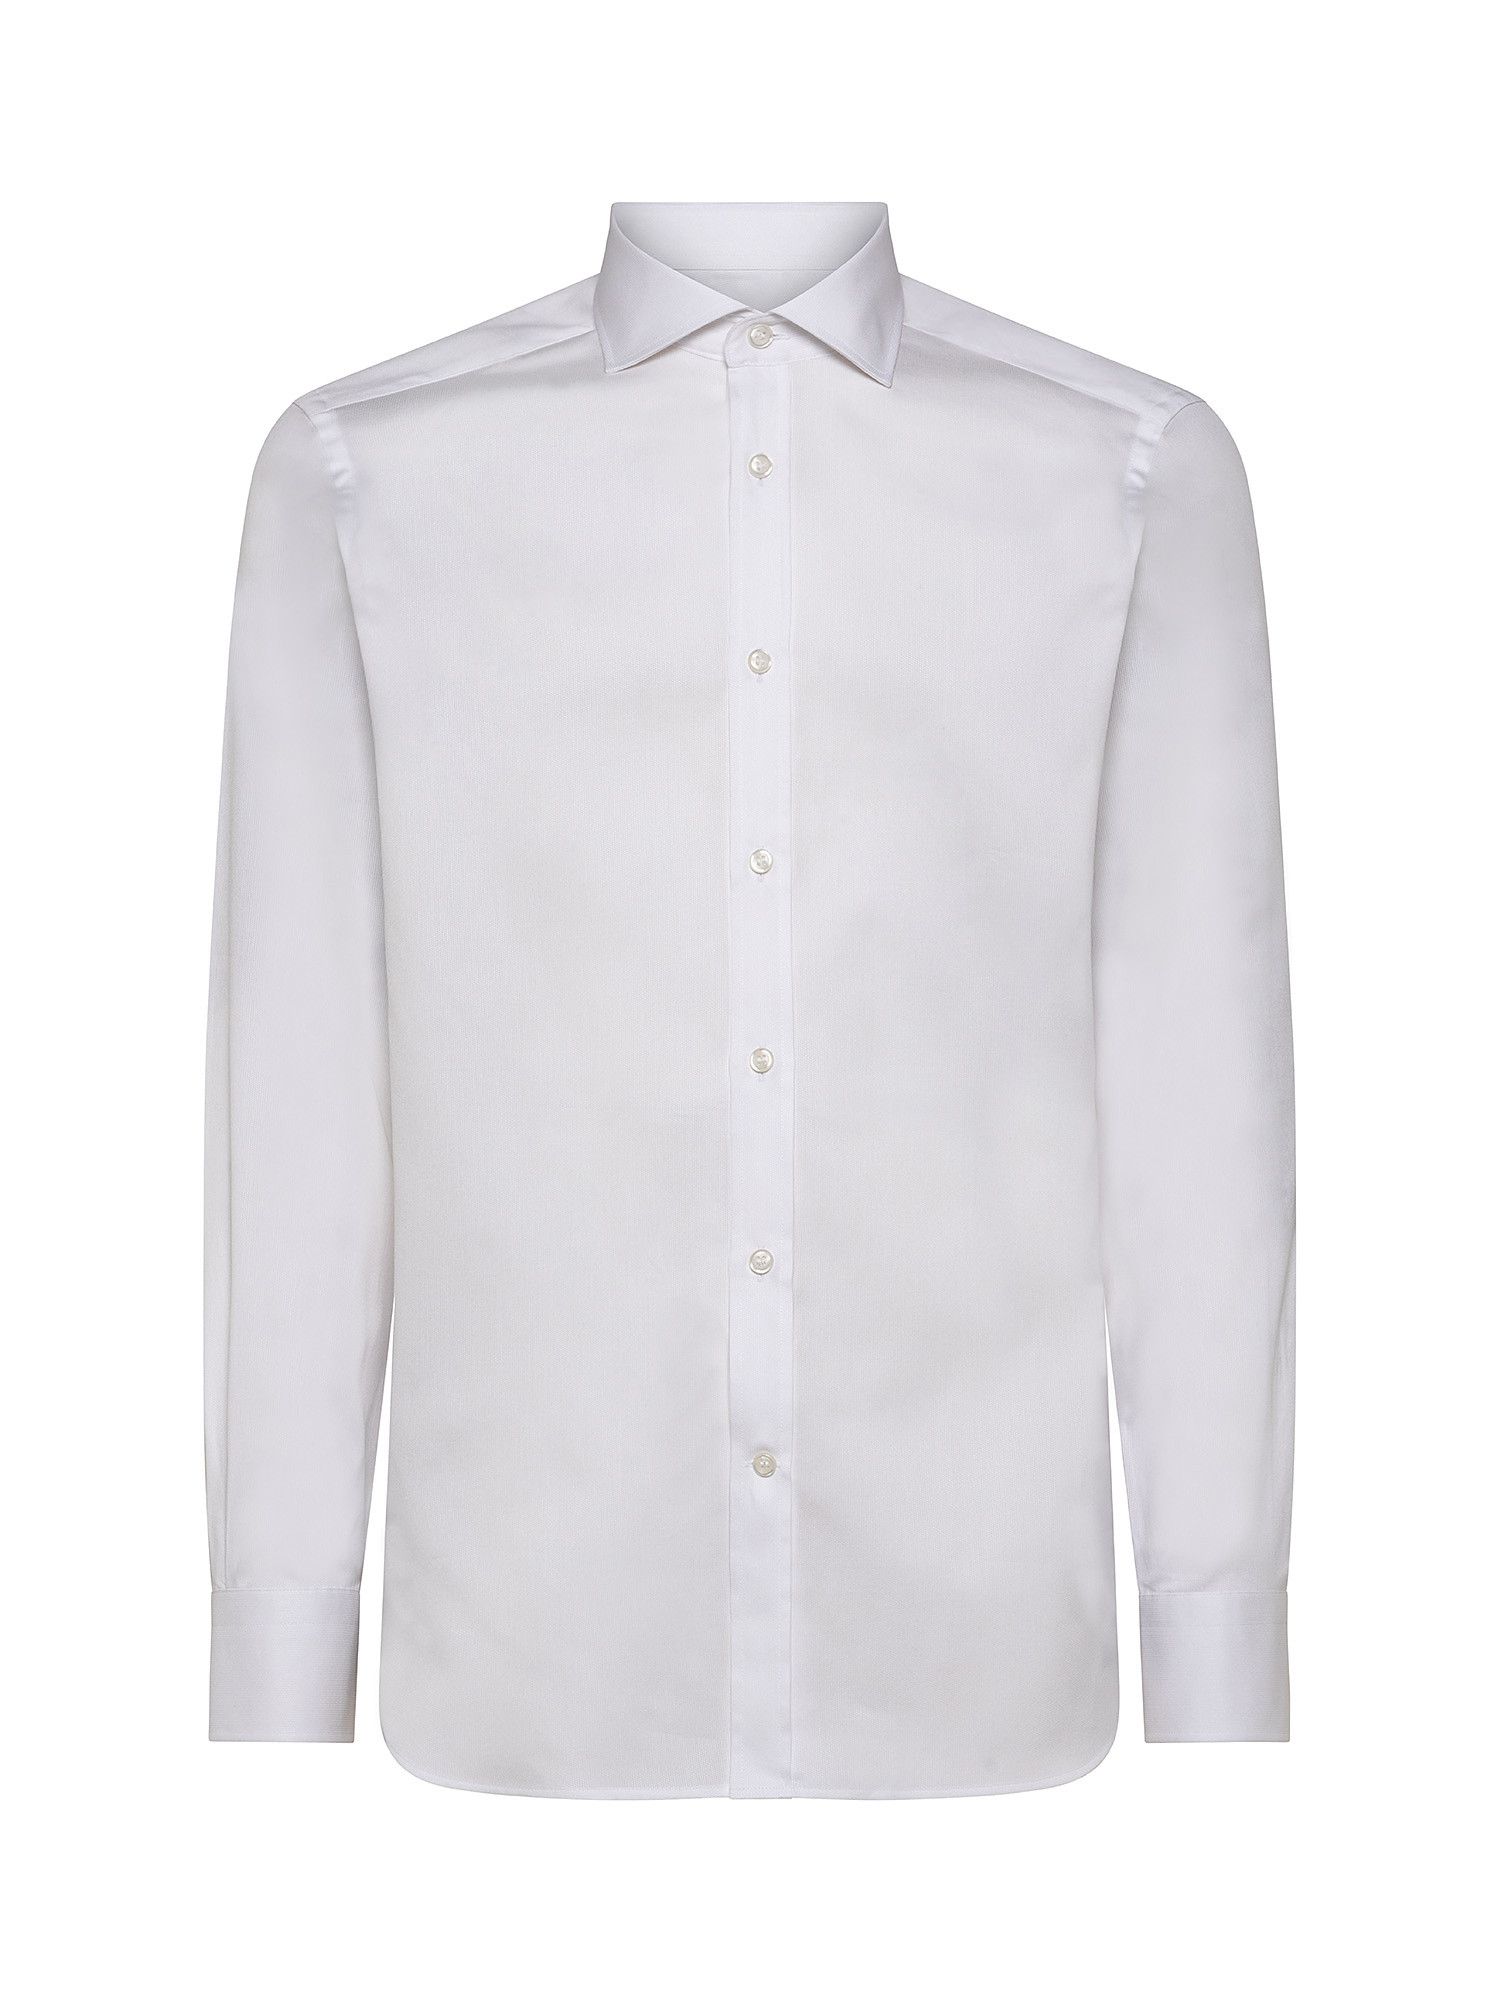 Camicia slim fit cotone armaturato, Bianco, large image number 0